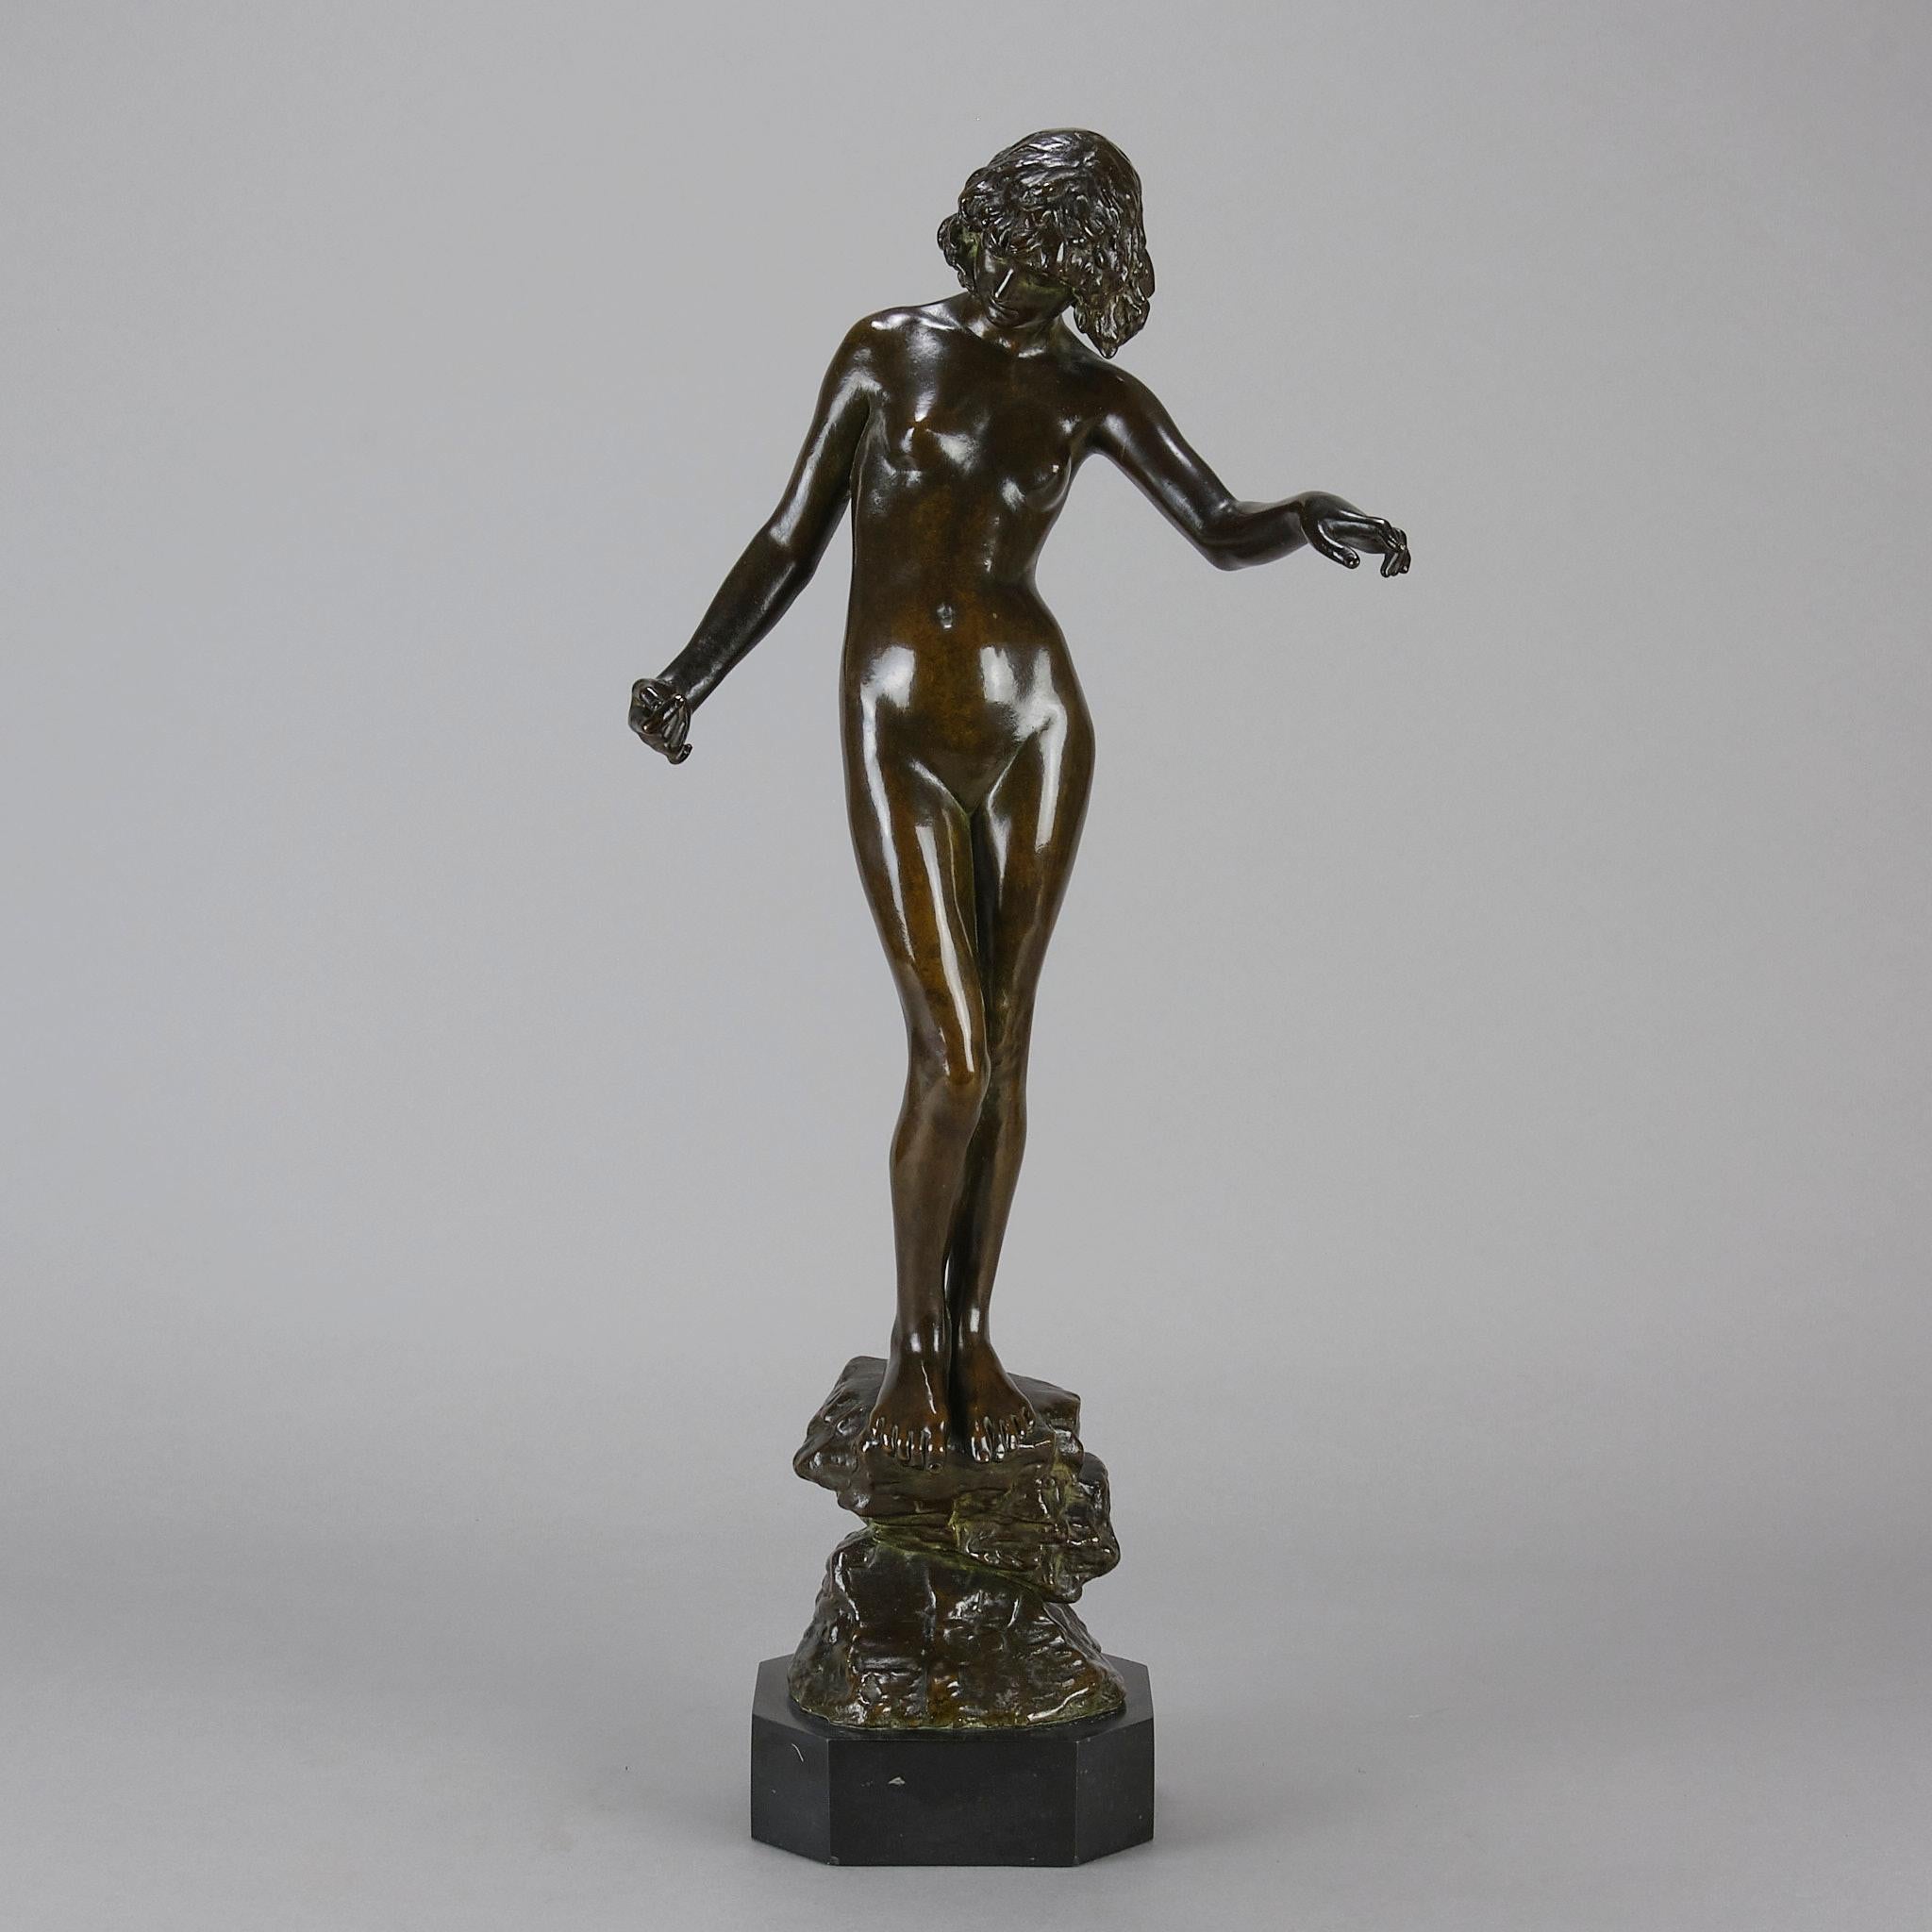 English Early 20th Century Art Nouveau Bronze sculpture entitled 